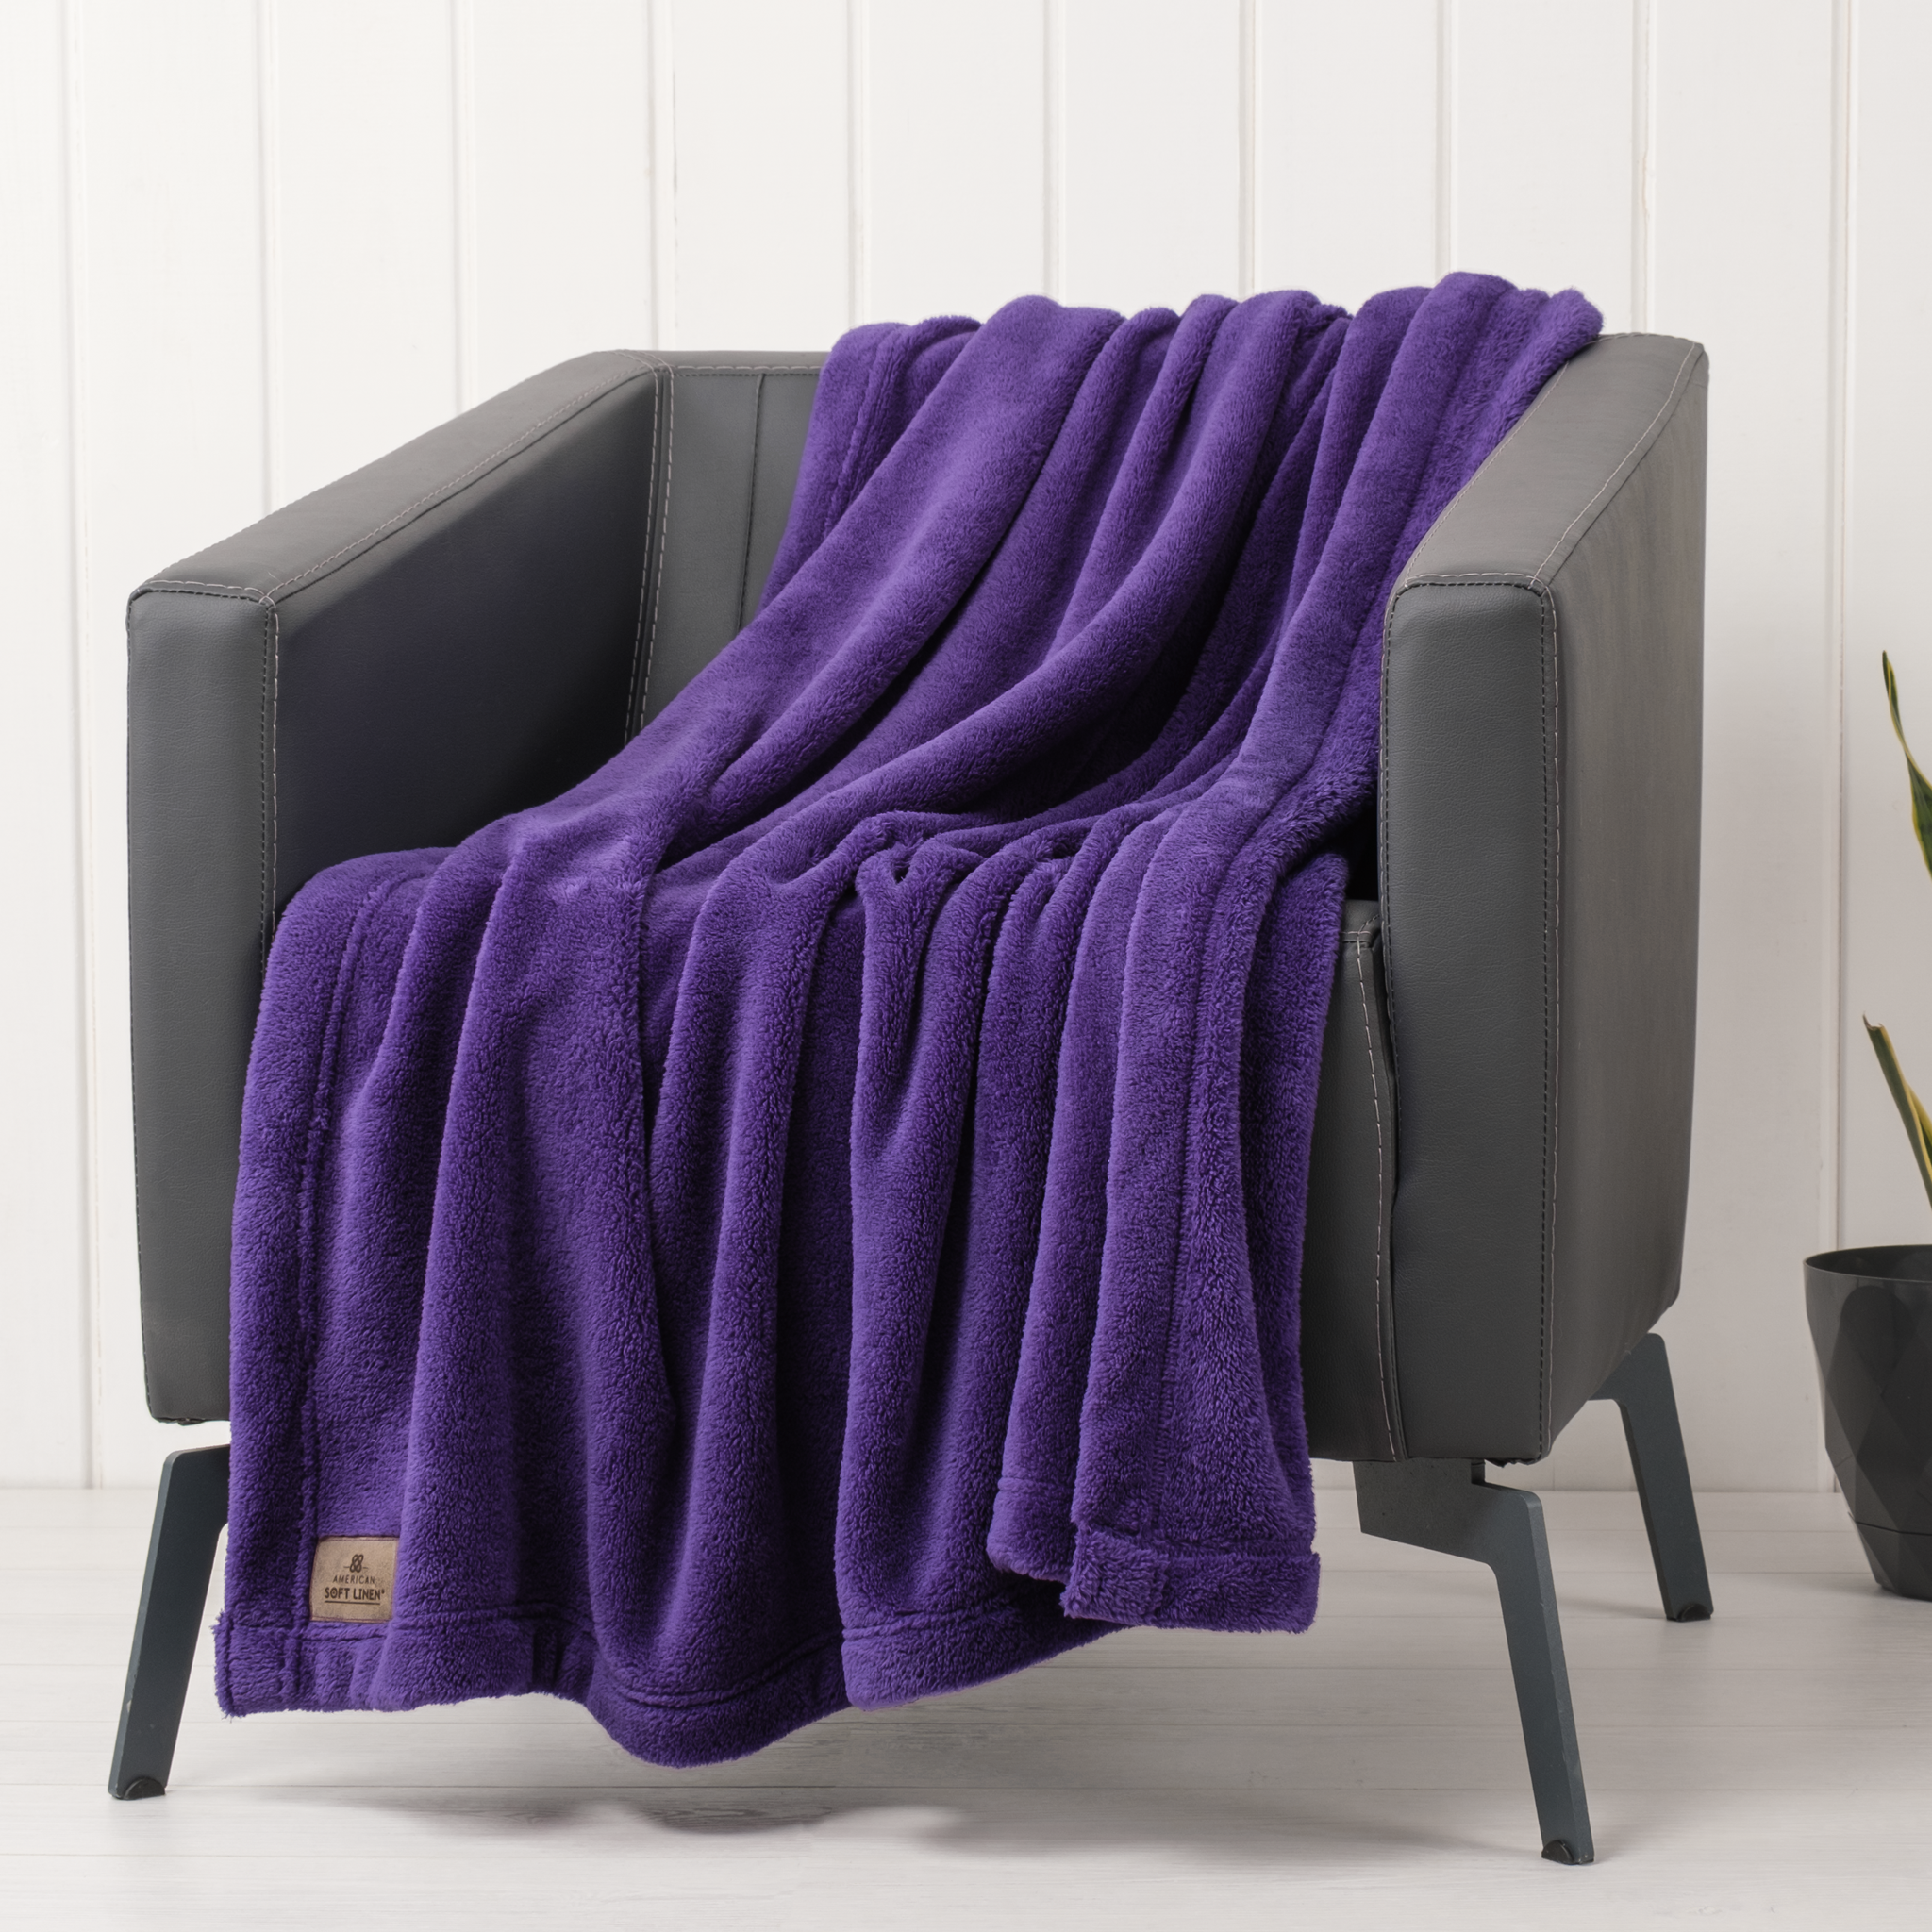 American Soft Linen - Bedding Fleece Blanket - Throw Size 50x60 inches - Purple - 1